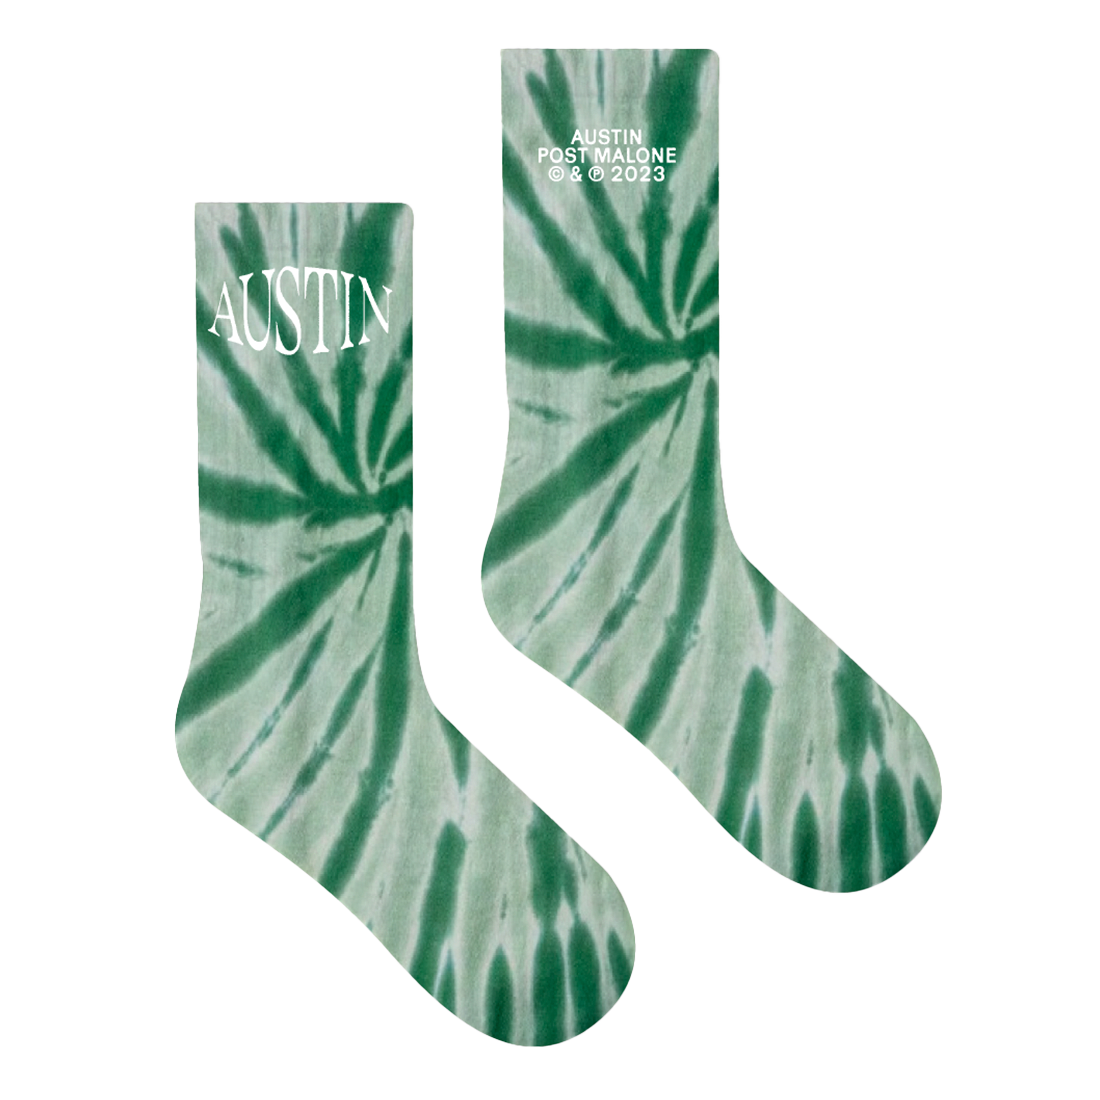 Post Malone - Austin Tie Dye Socks